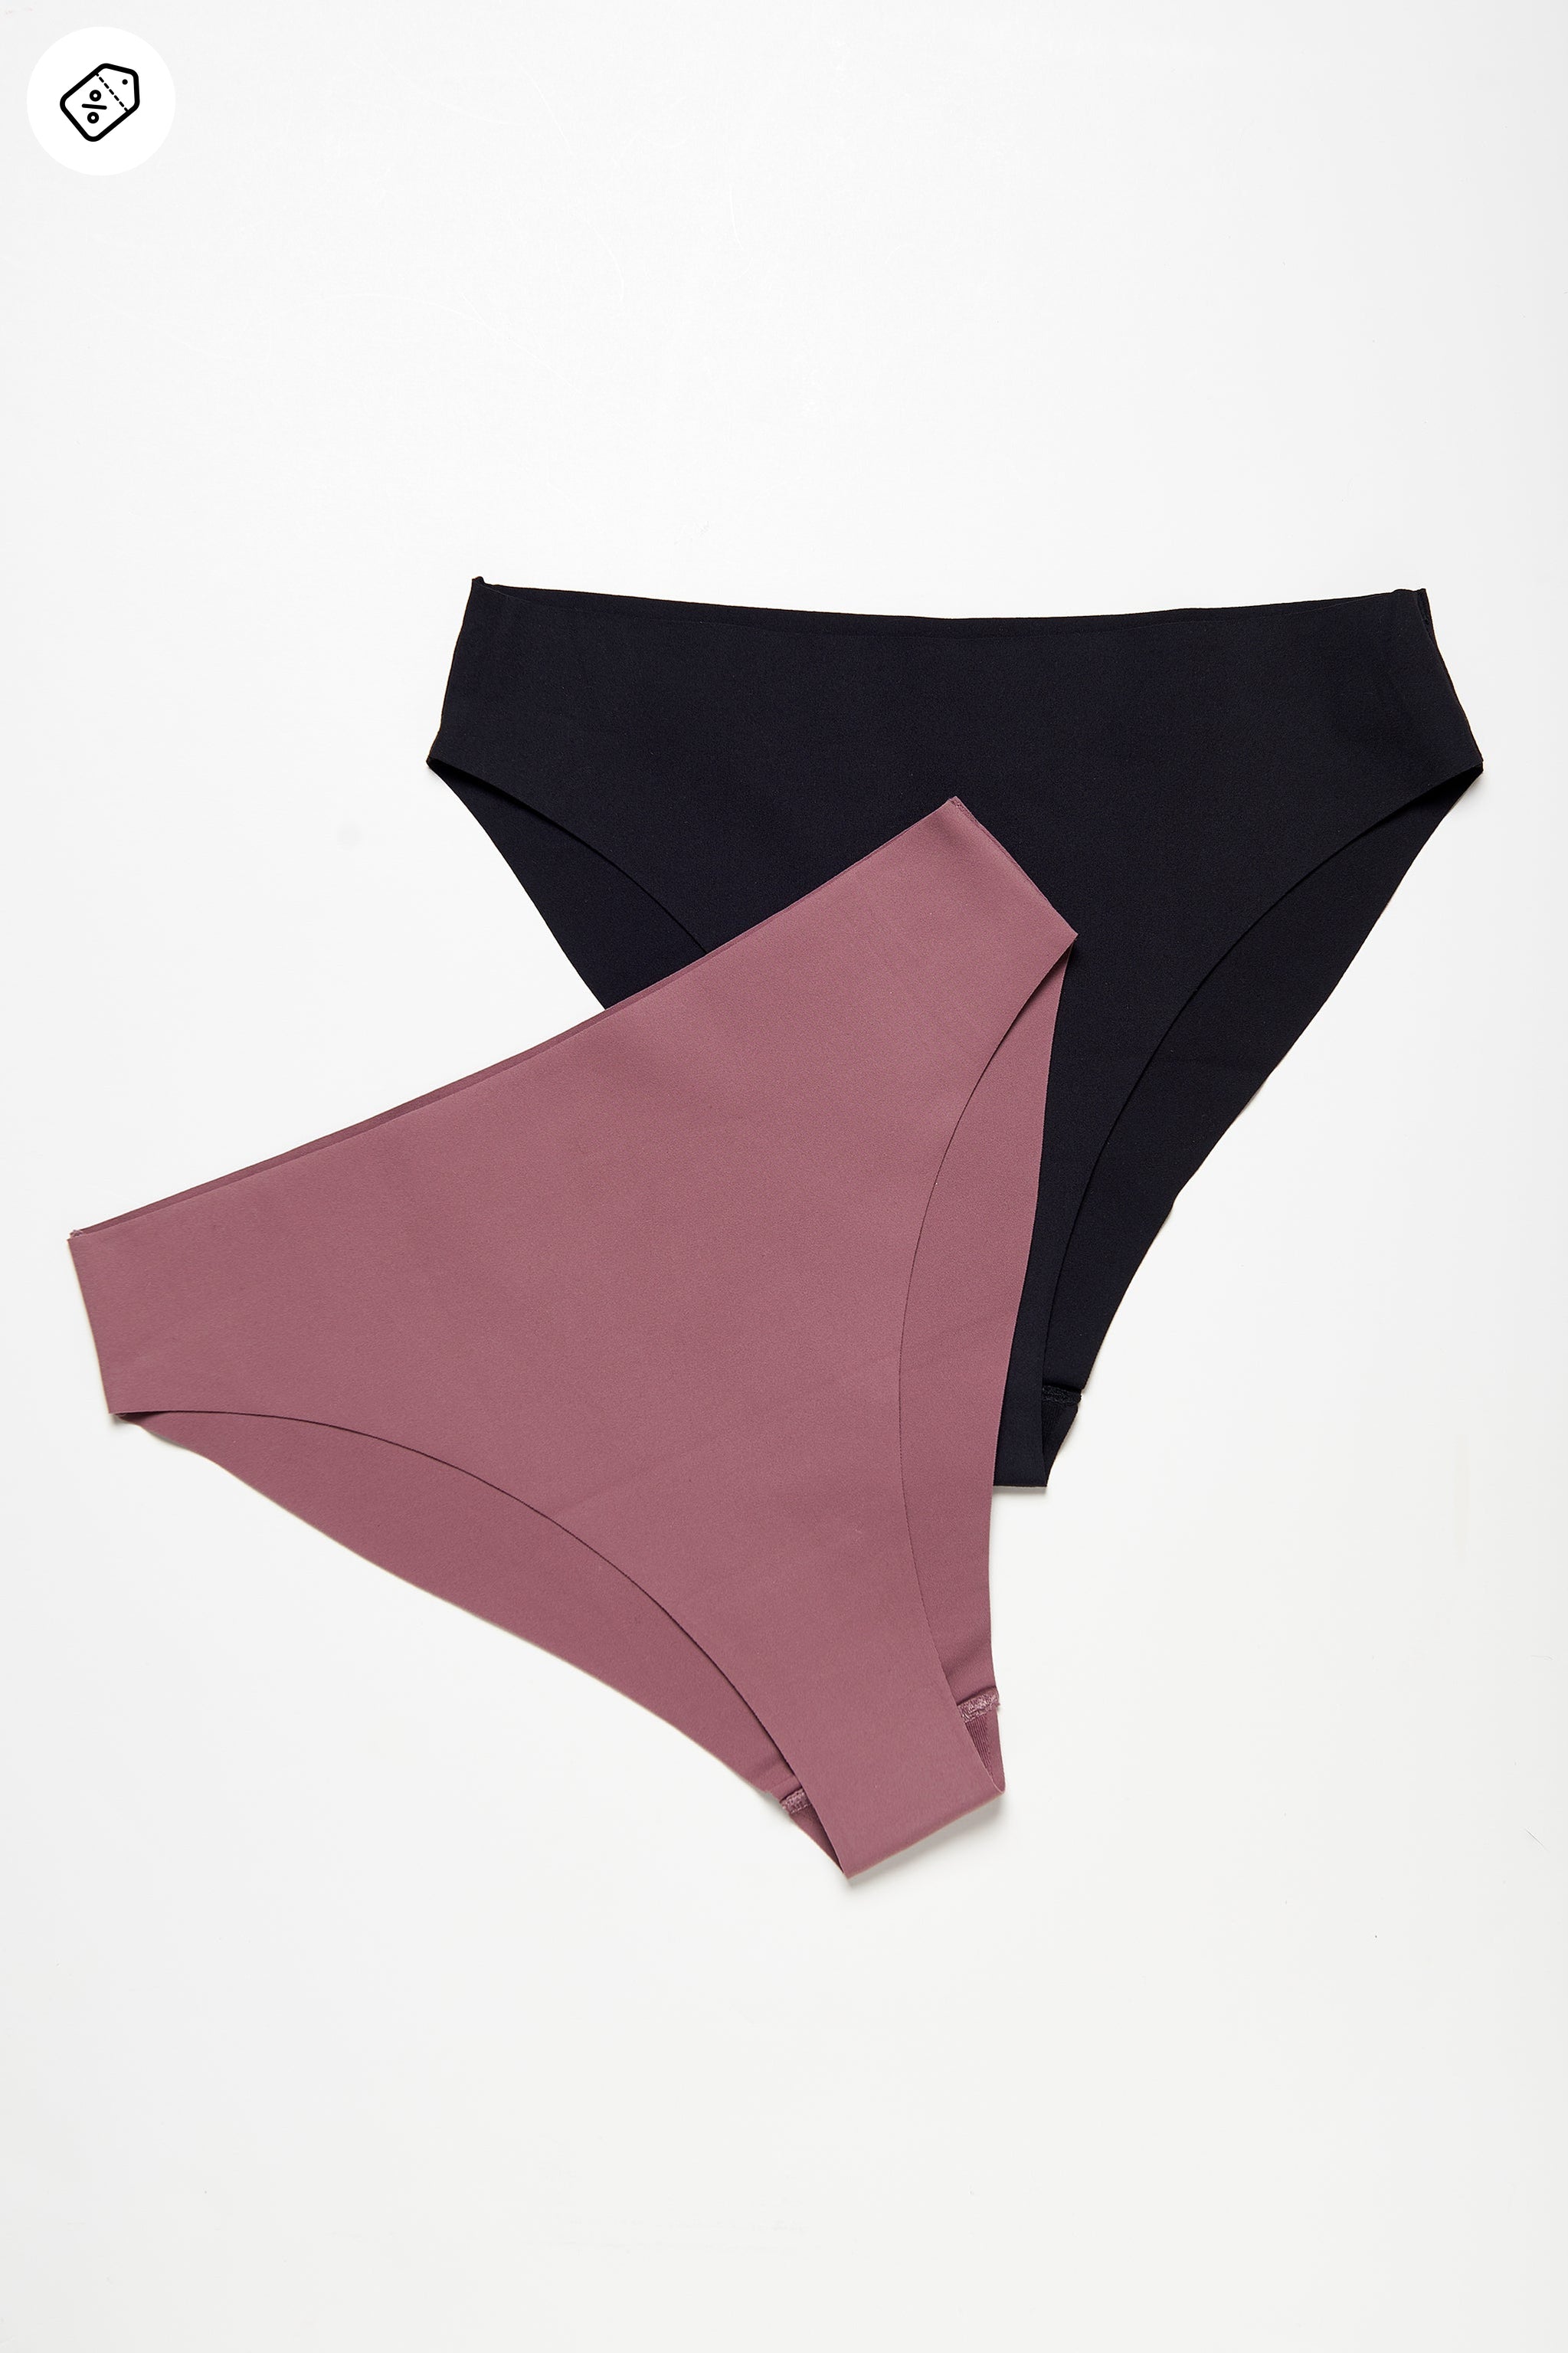 Cilcicy Women Wire-Free Corset Bra Harness Sage Sheer Lace Panties Set 